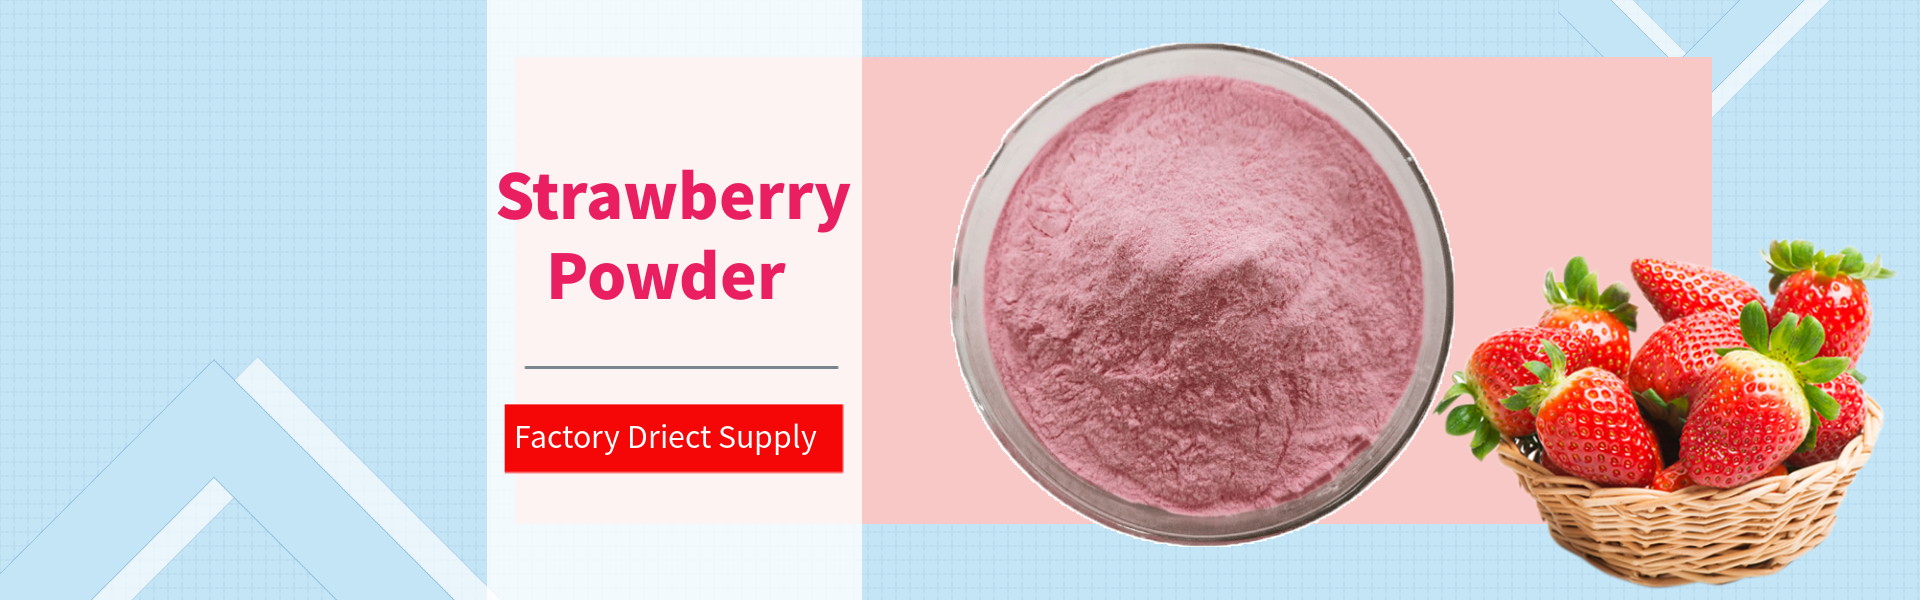 Strawberry Powder (2)